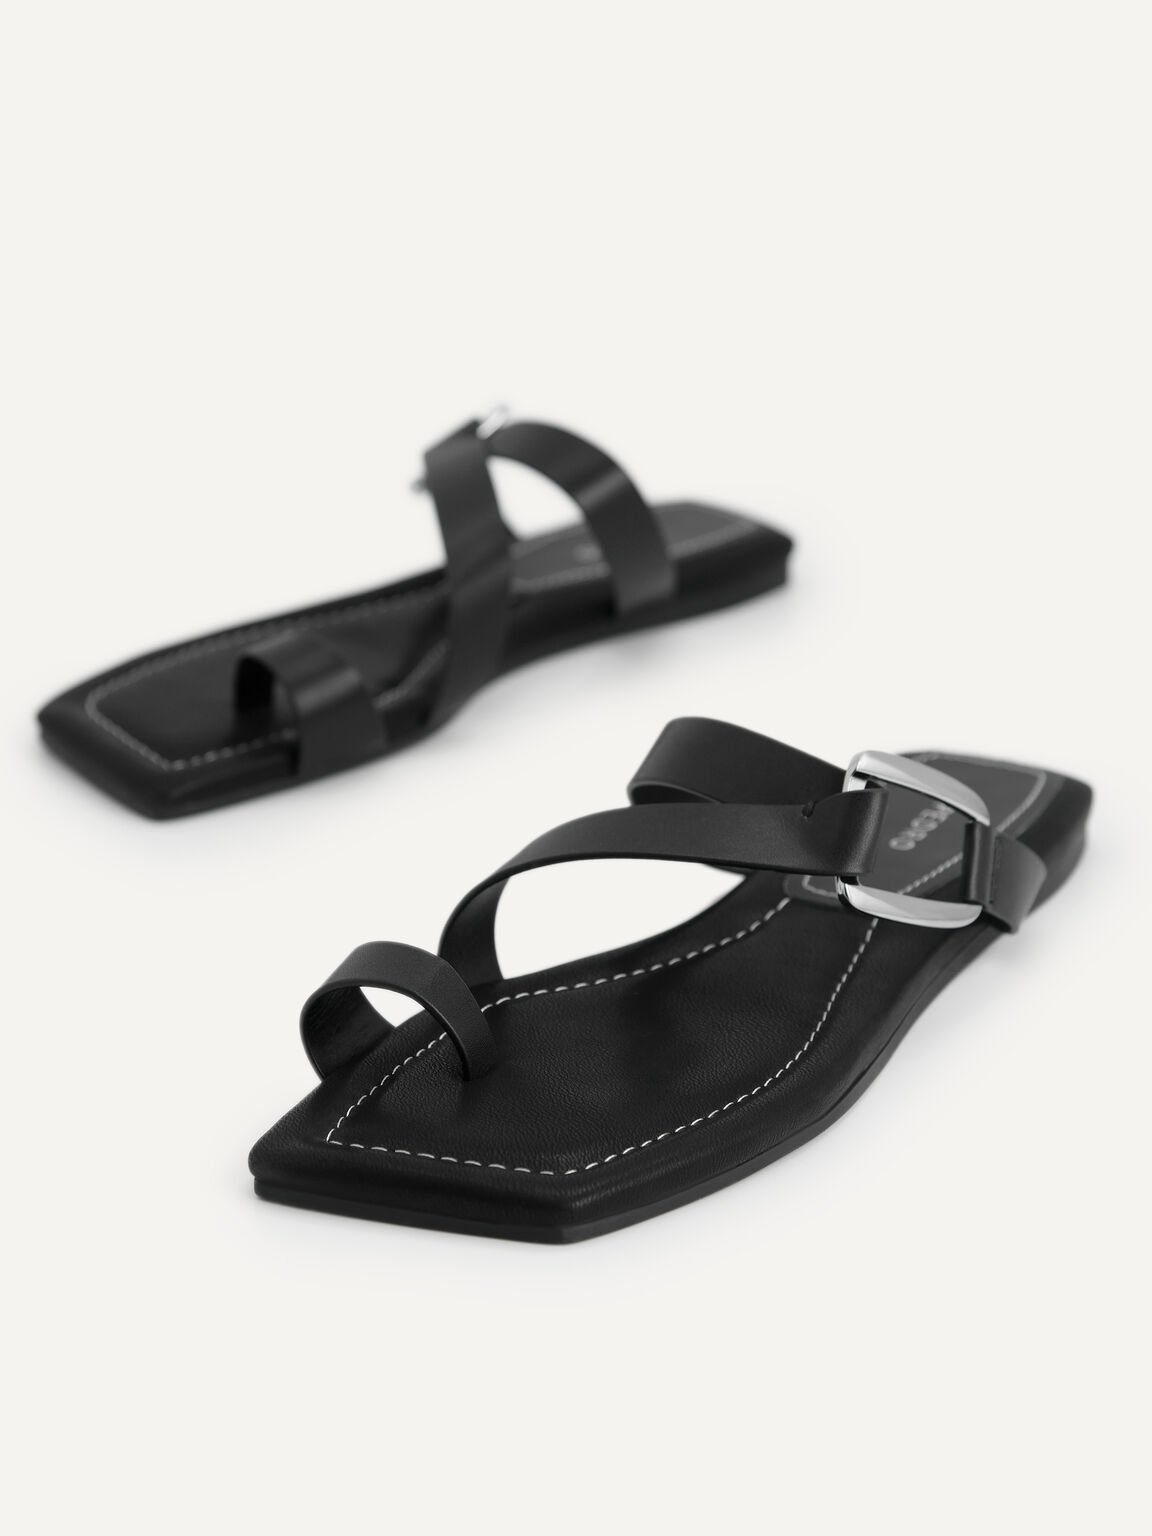 Square-Toe Toe Loop Sandals, Black